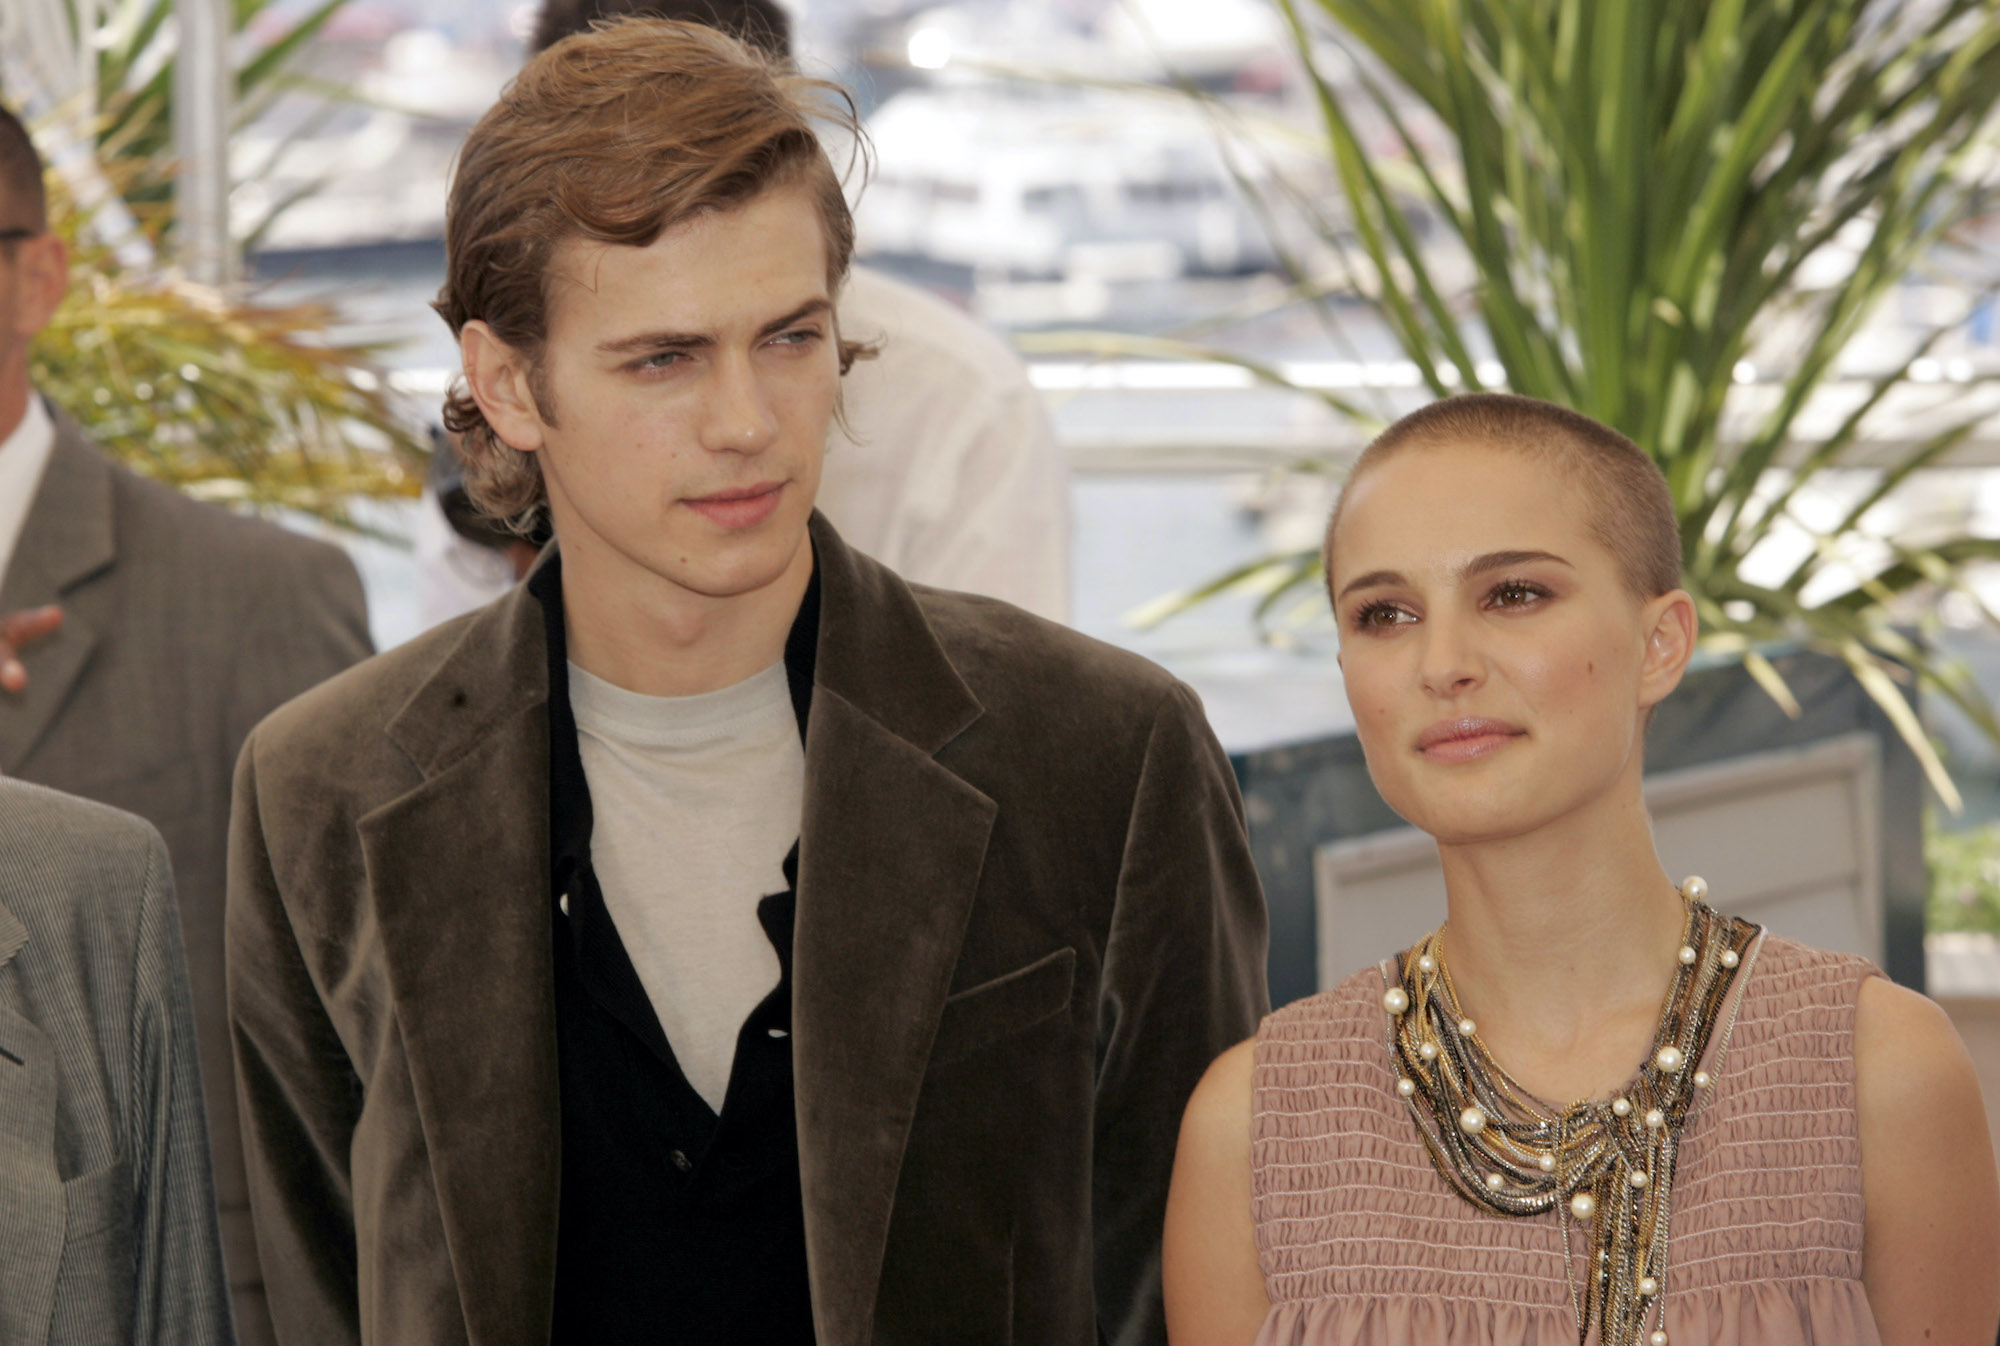 ‘Star Wars’: Behind-the-Scenes Photo of Natalie Portman and Hayden Christensen ‘Looks Like a Cringe High School Couple Photo’